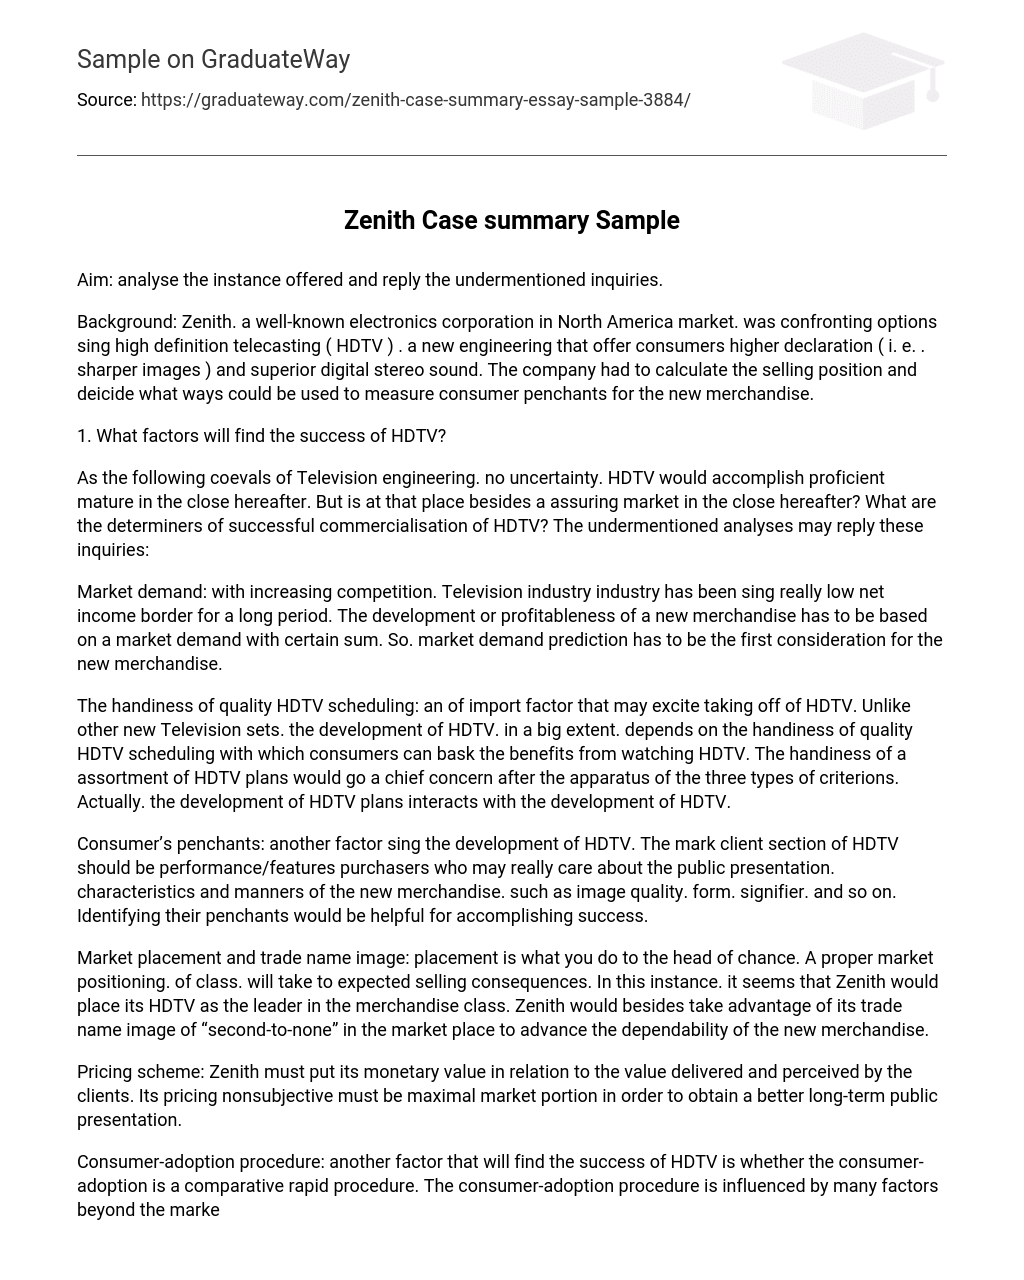 Zenith Case summary Sample